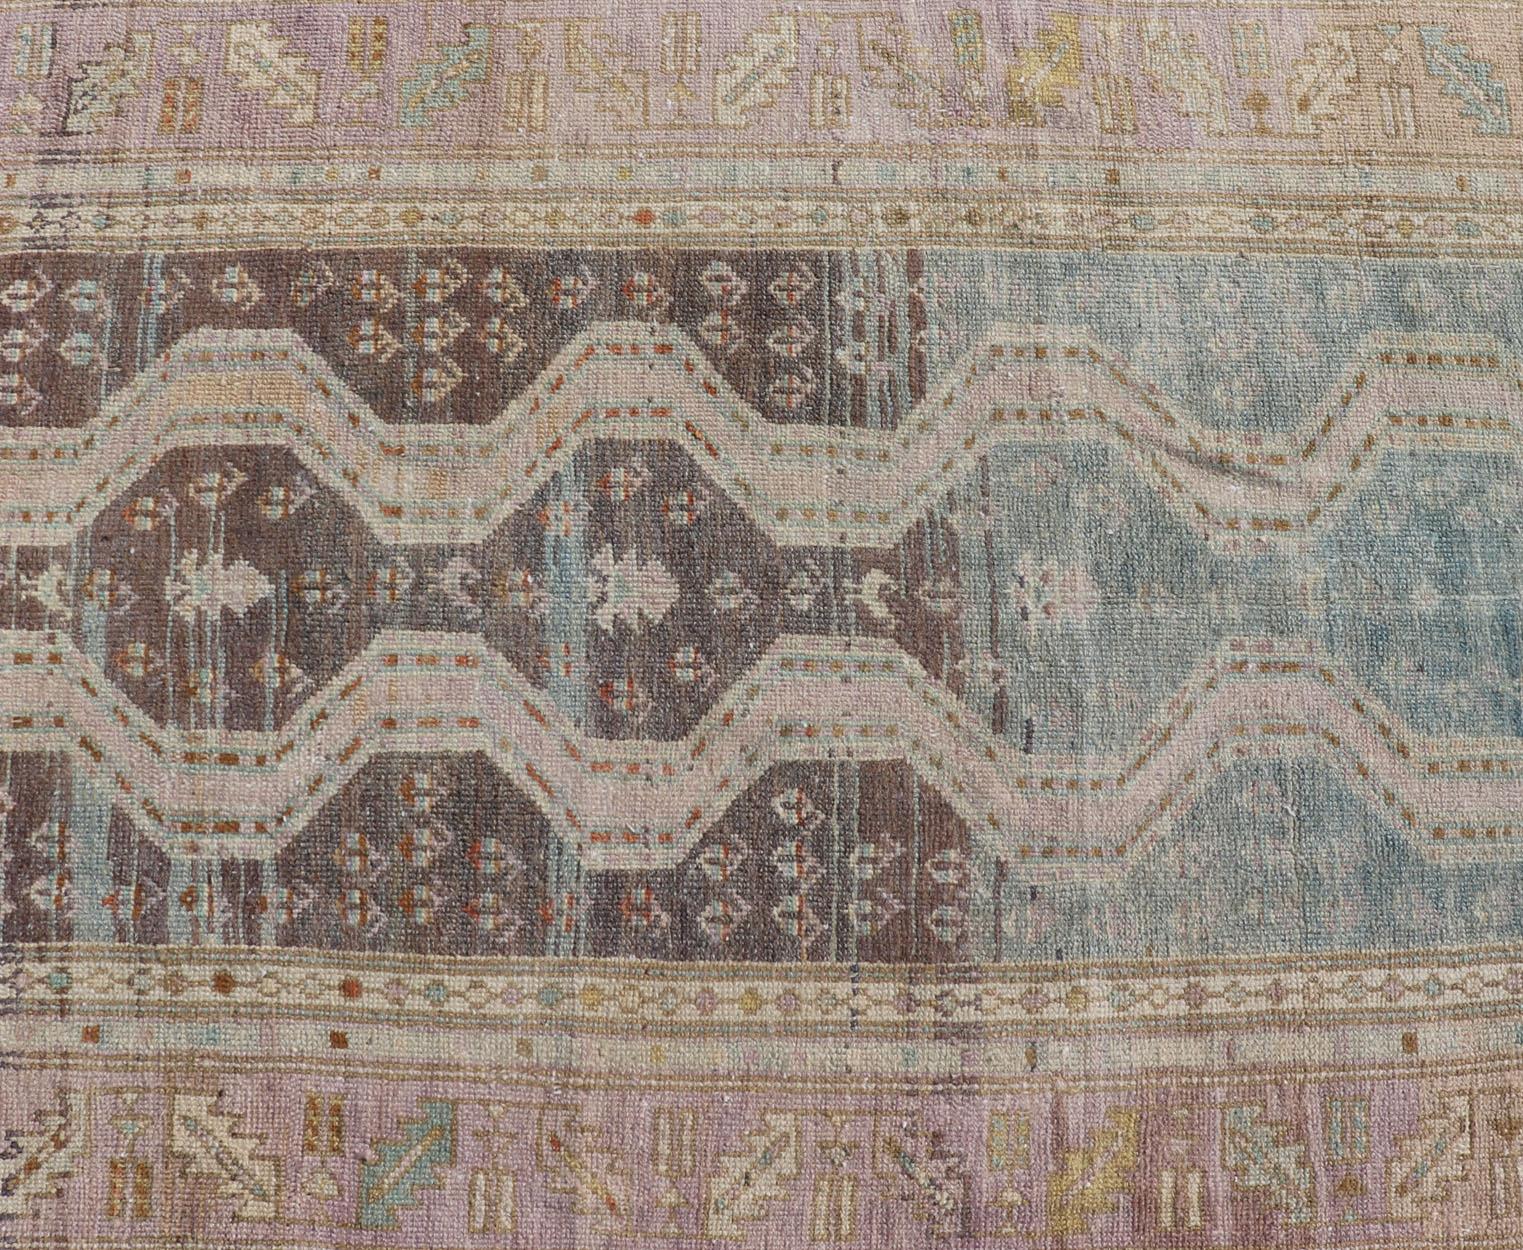 Persian hand knotted Hamadan wool Runner with Geometric Design Unique Design. Intricately designed antique Hamadan Runner in light tones. Keivan Woven Arts / rug EMB-9596-P13513, country of origin / type: Iran / Hamadan, circa 1920.

Measures:3'3